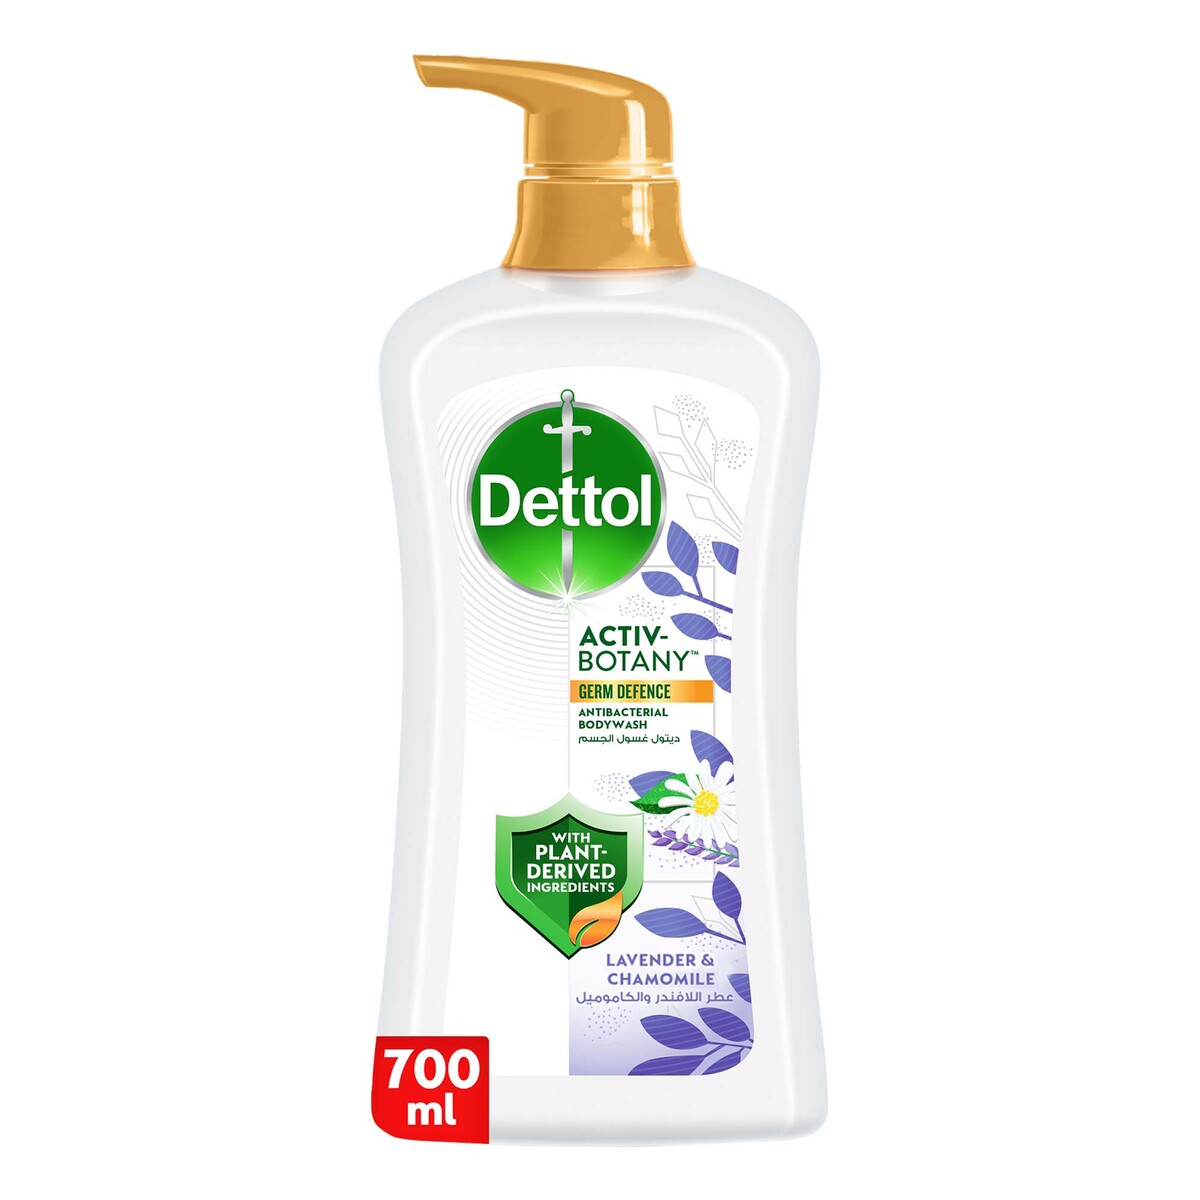 Dettol Activ-Botany Antibacterial Bodywash, Lavender & Chamomile Fragrance 700 ml